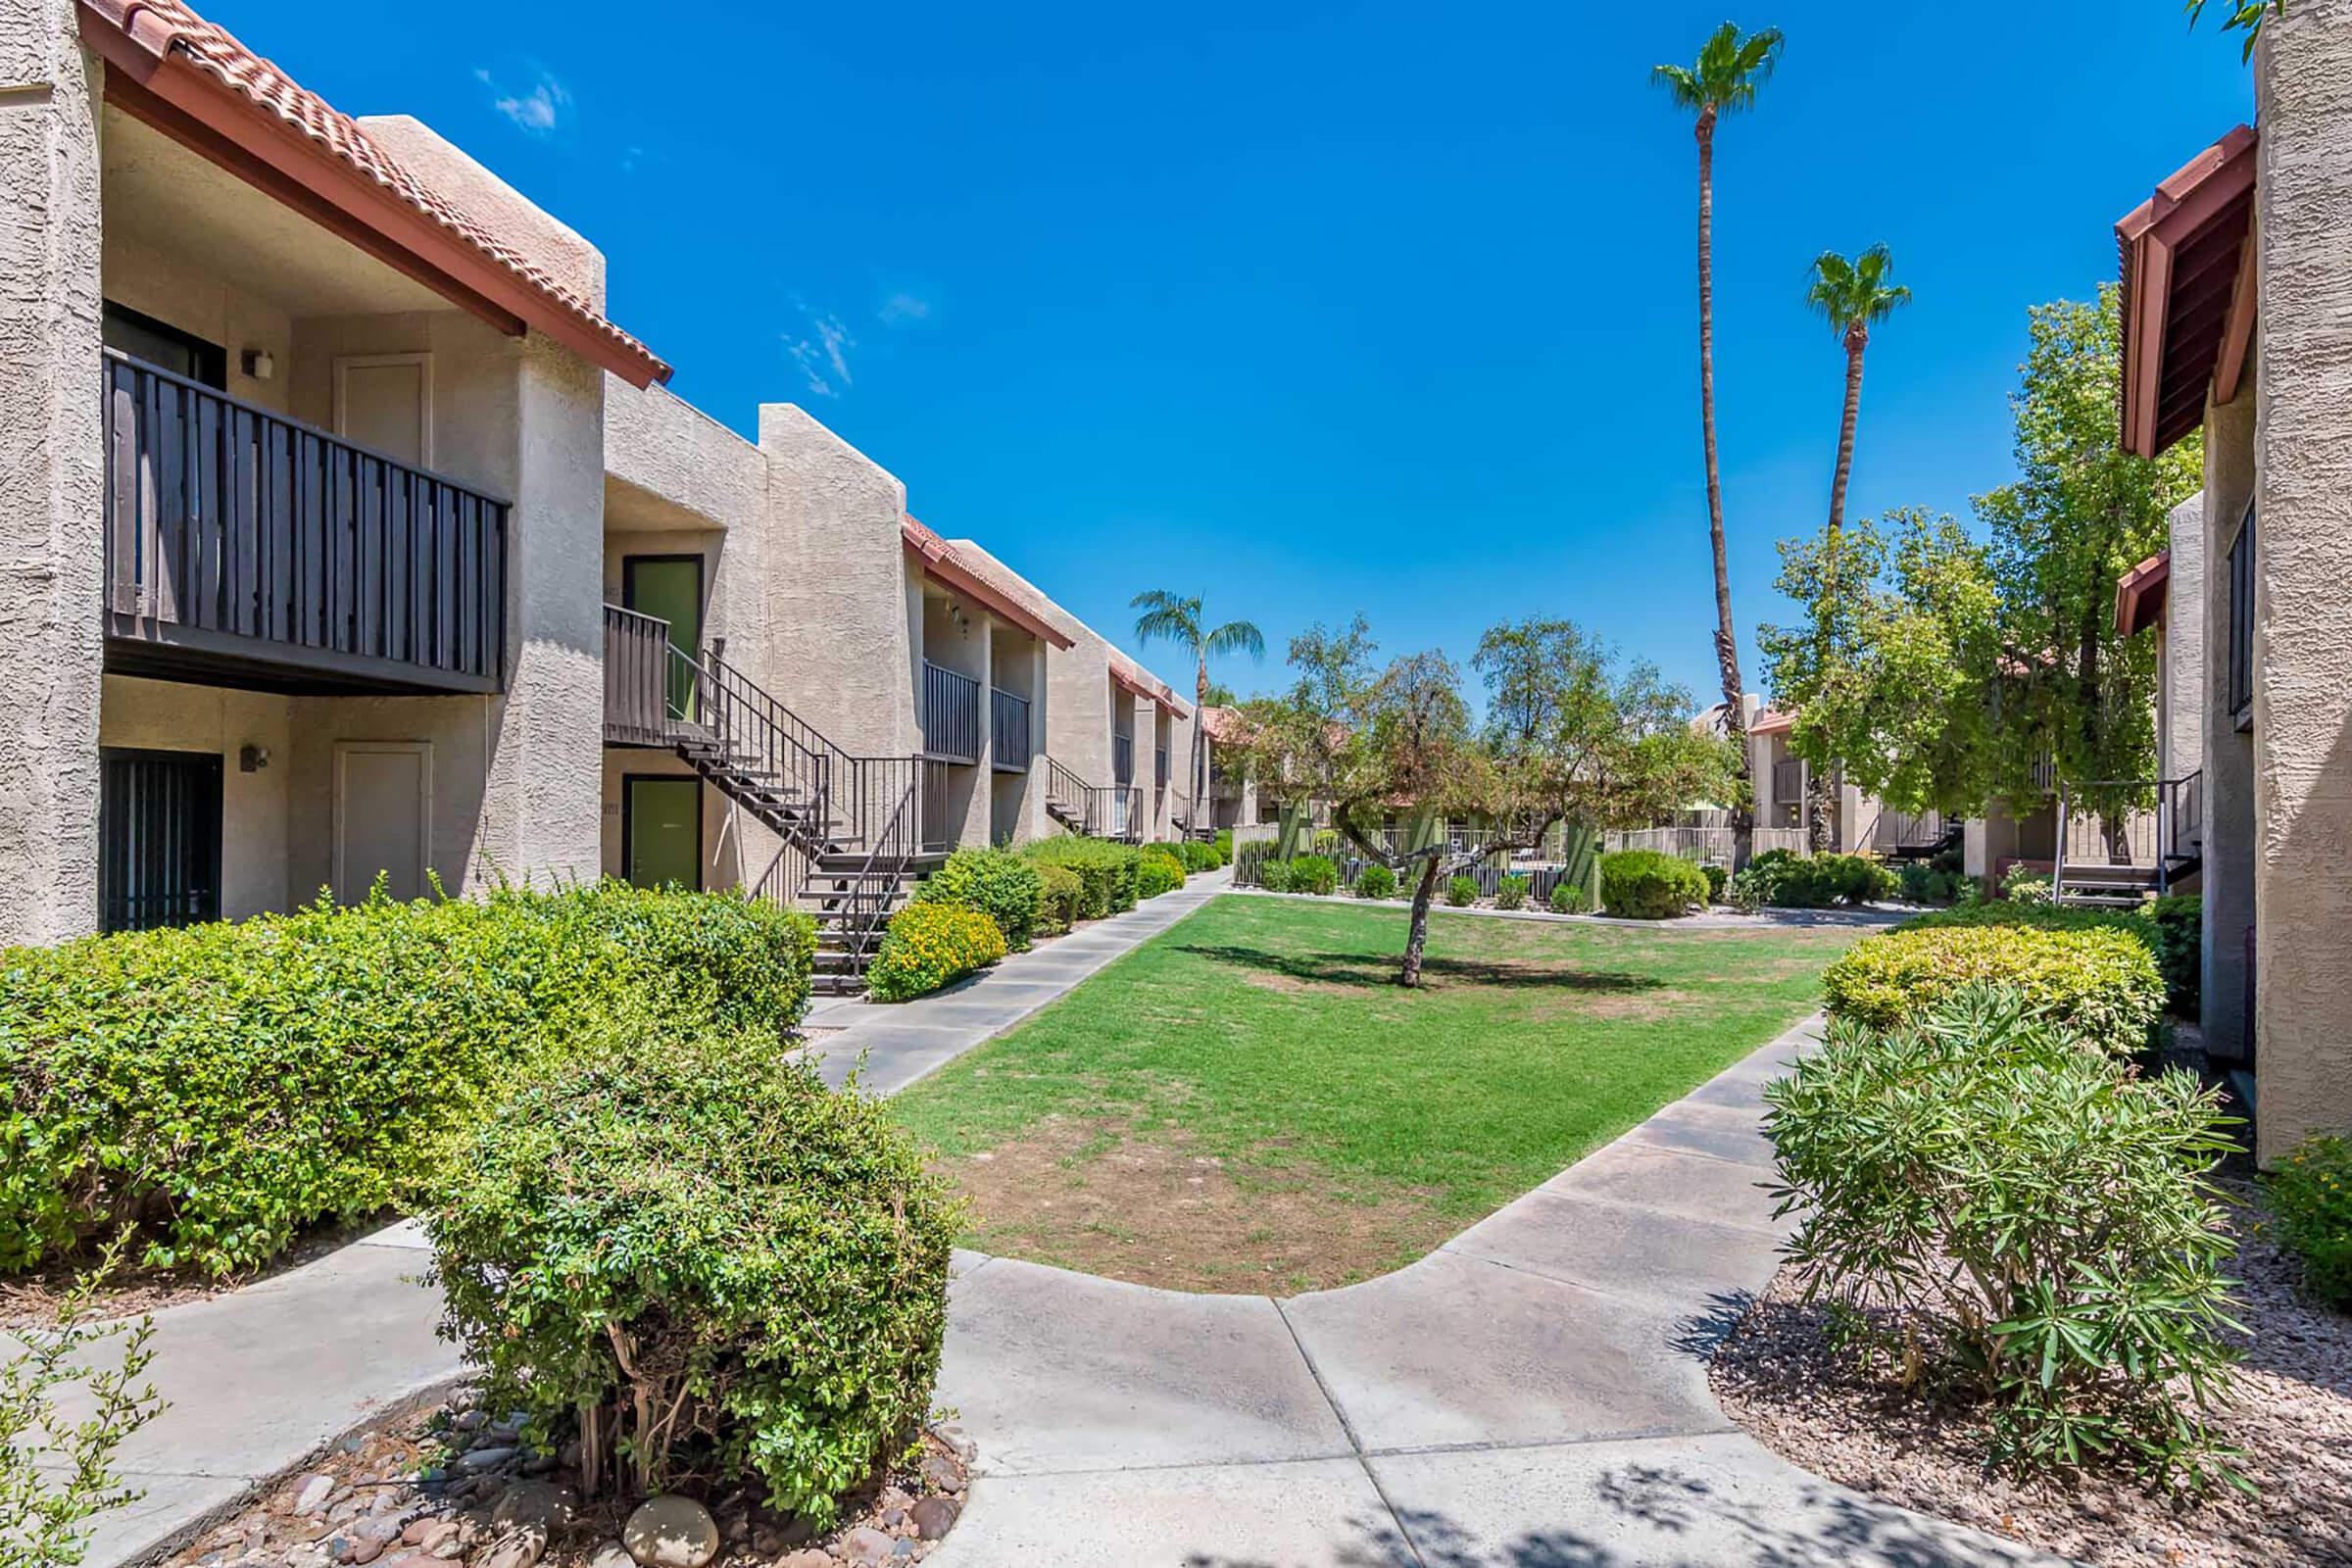 Coveted Location and Tranquil Apartment Community - Glenridge Apartments - Glendale - Arizona